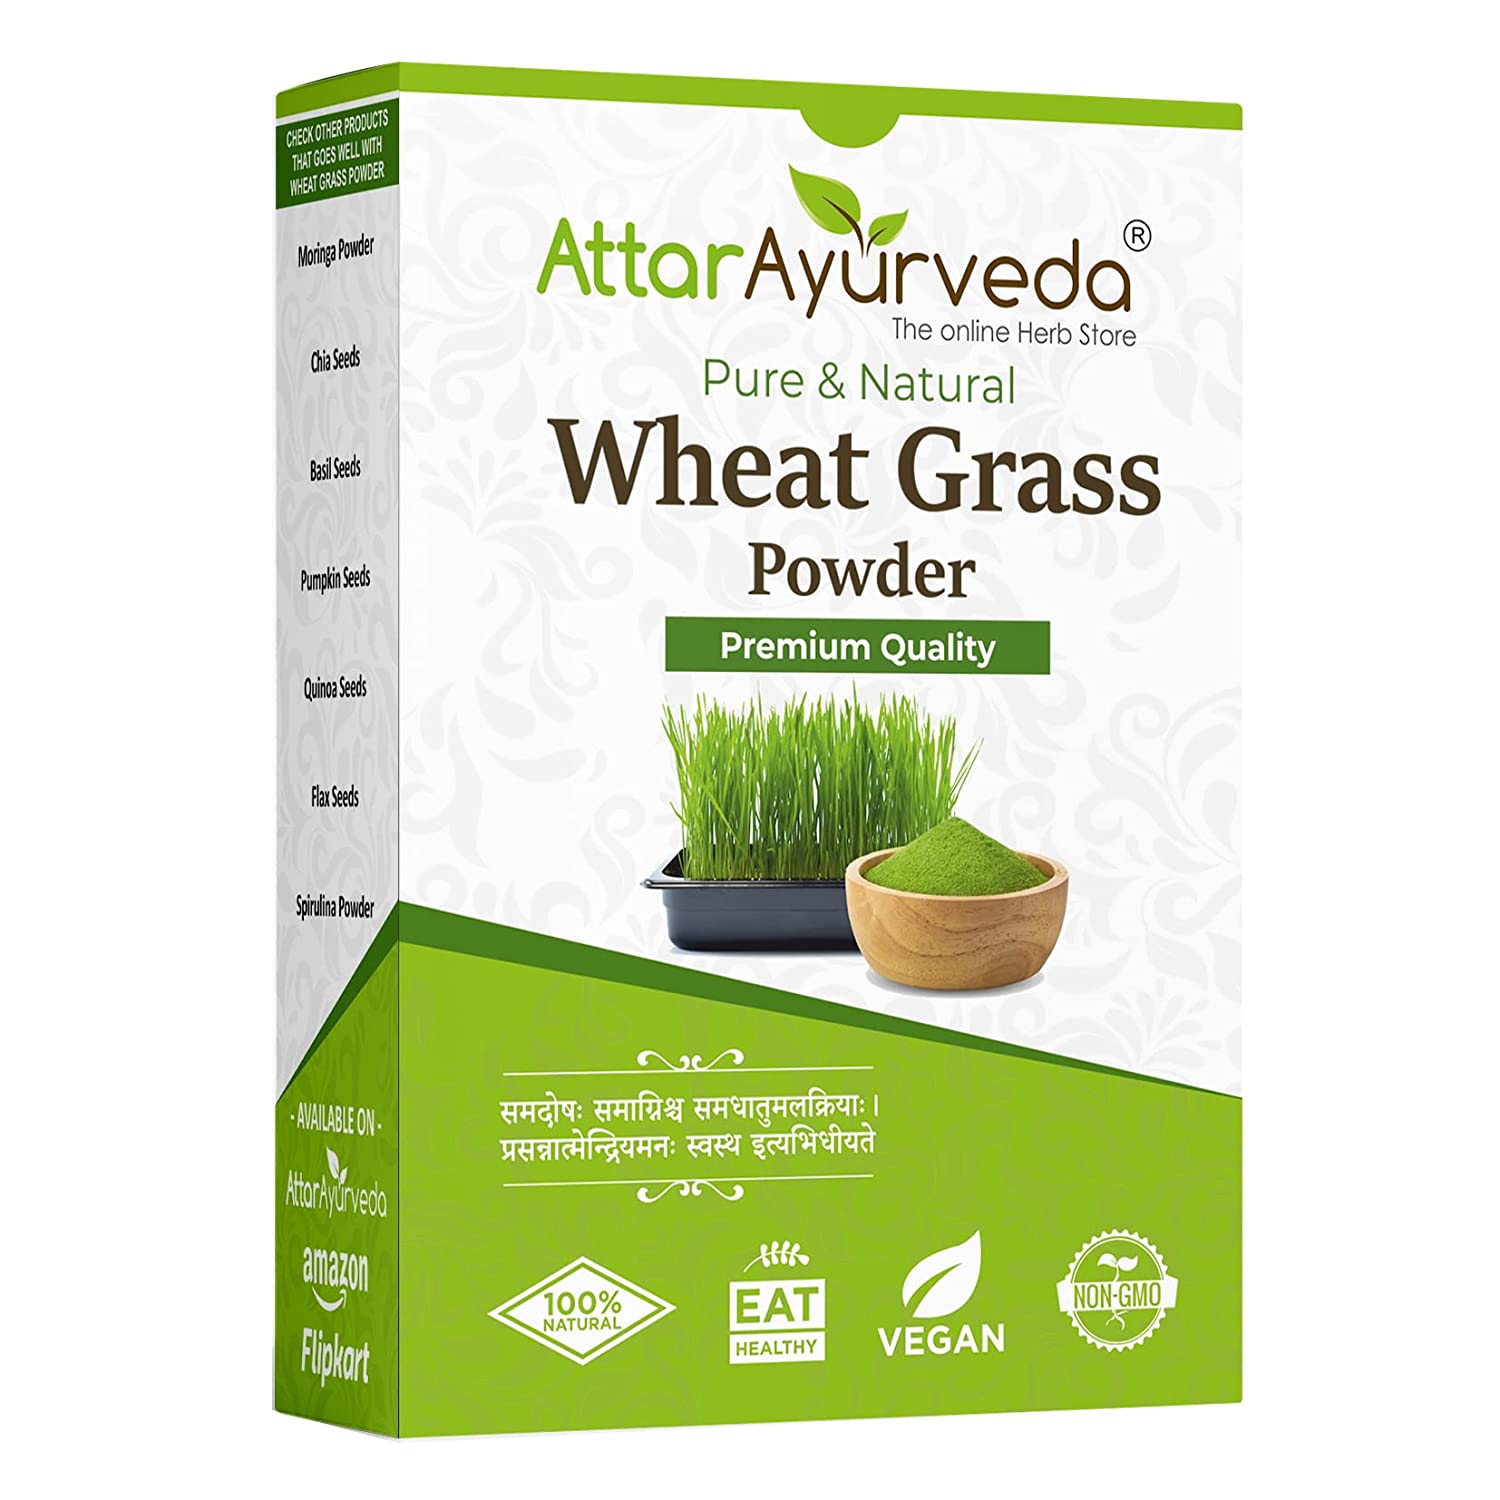 Attar Ayurveda Wheat grass powder